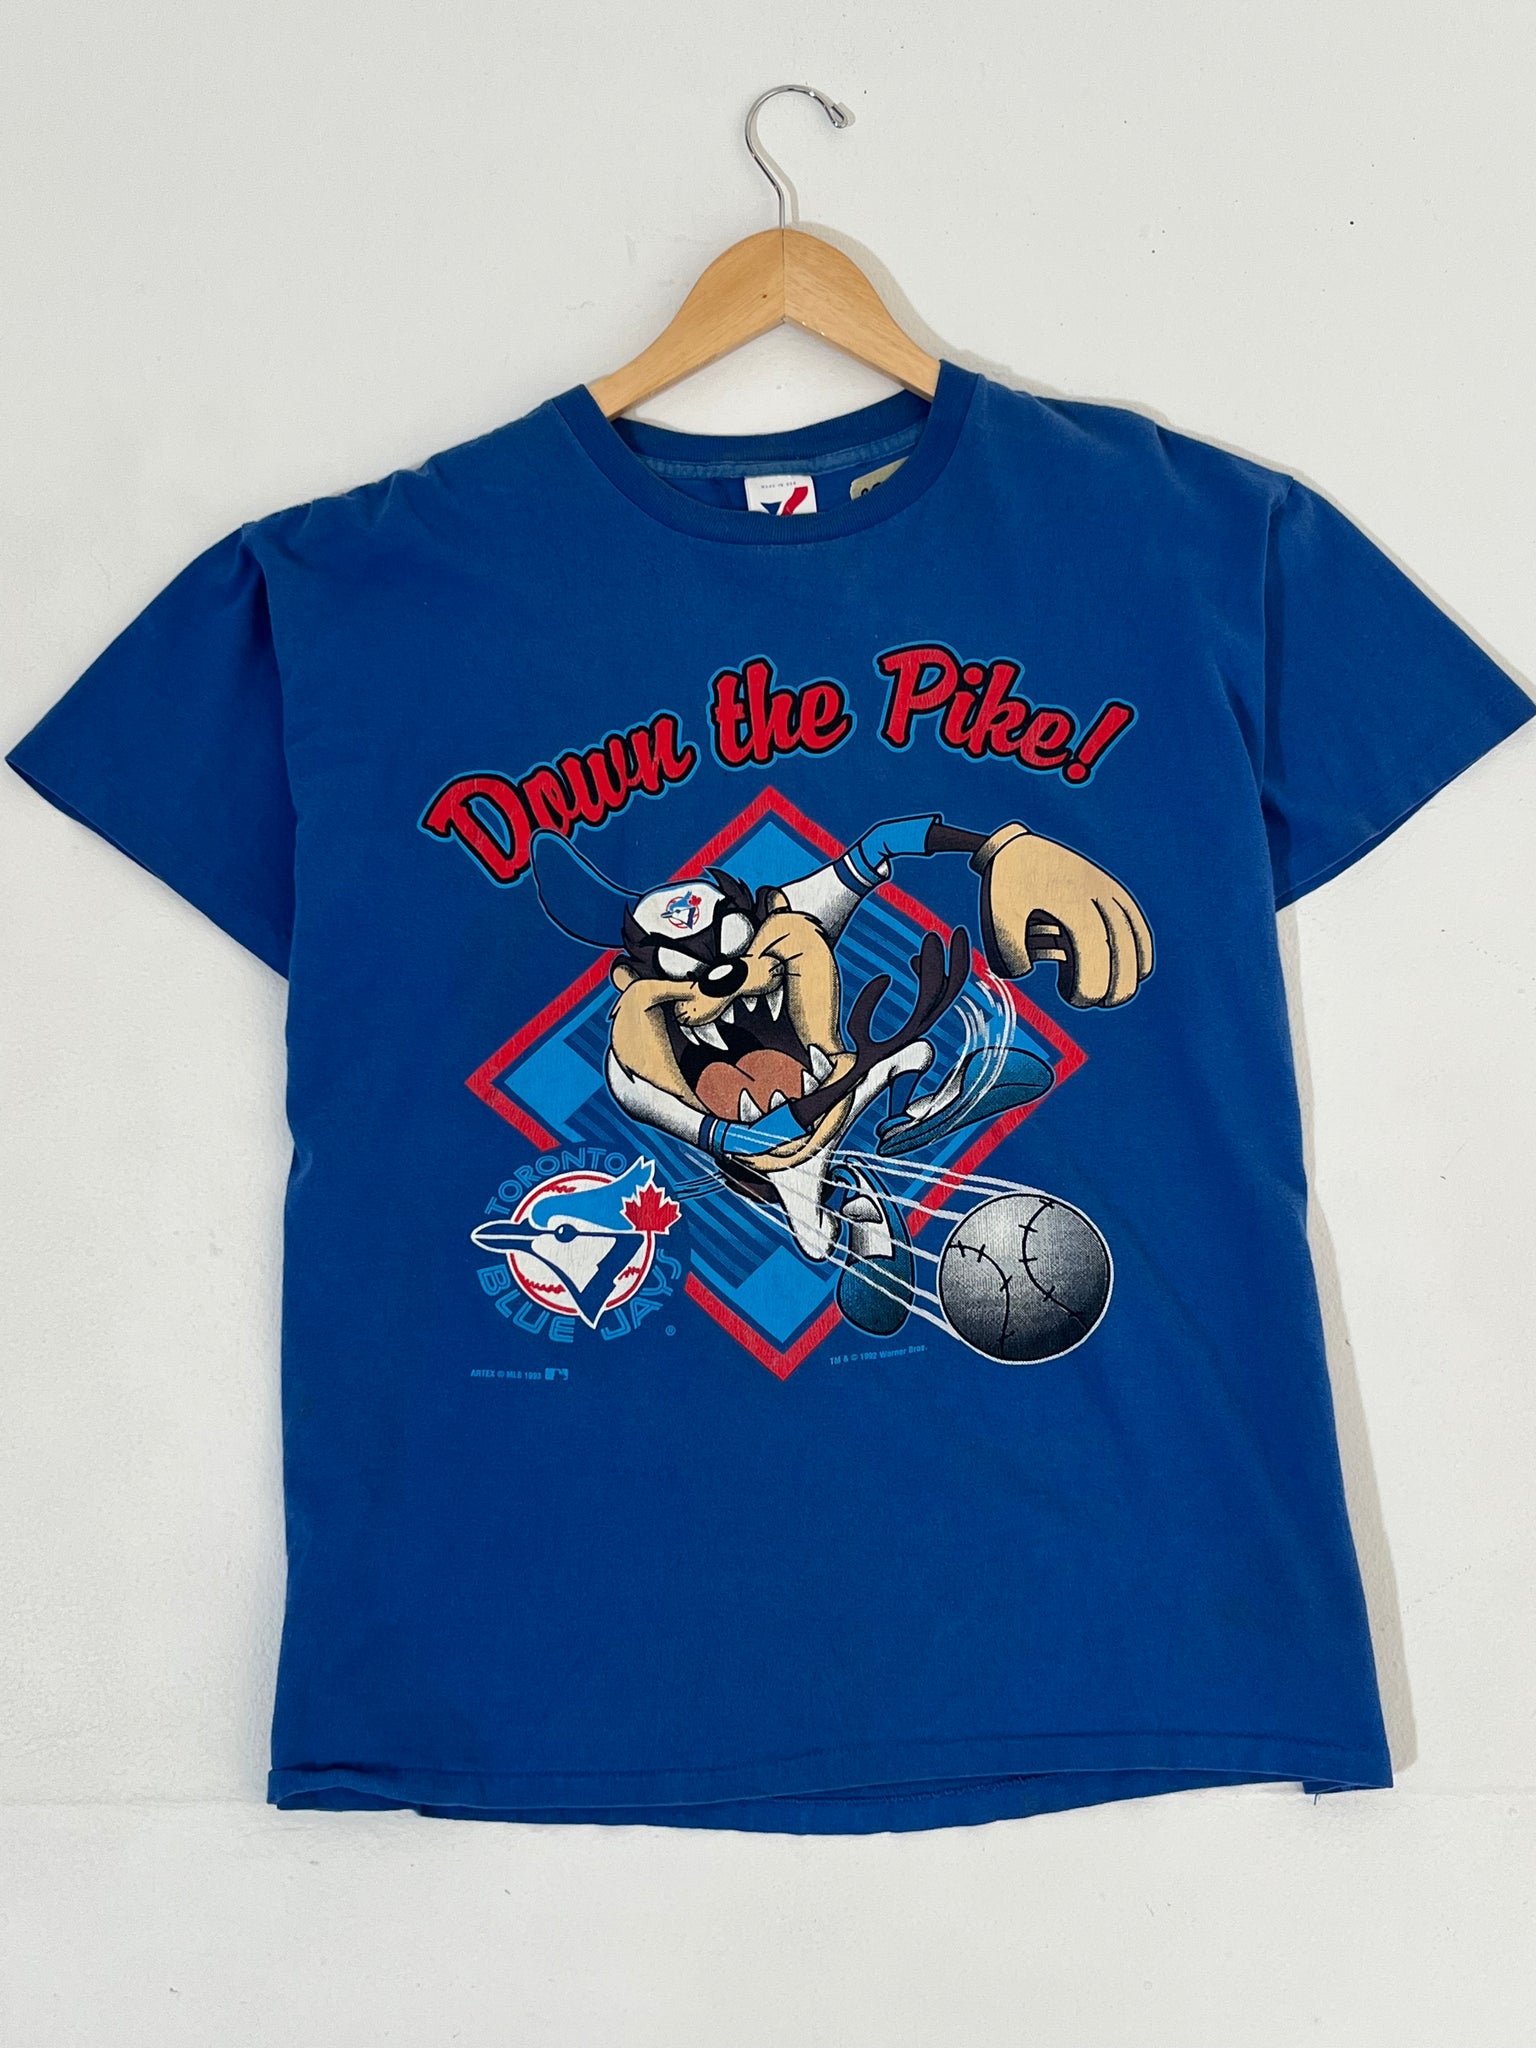 Vintage Toronto Blue Jays MLB Baseball 1993 T-shirt Size XL 